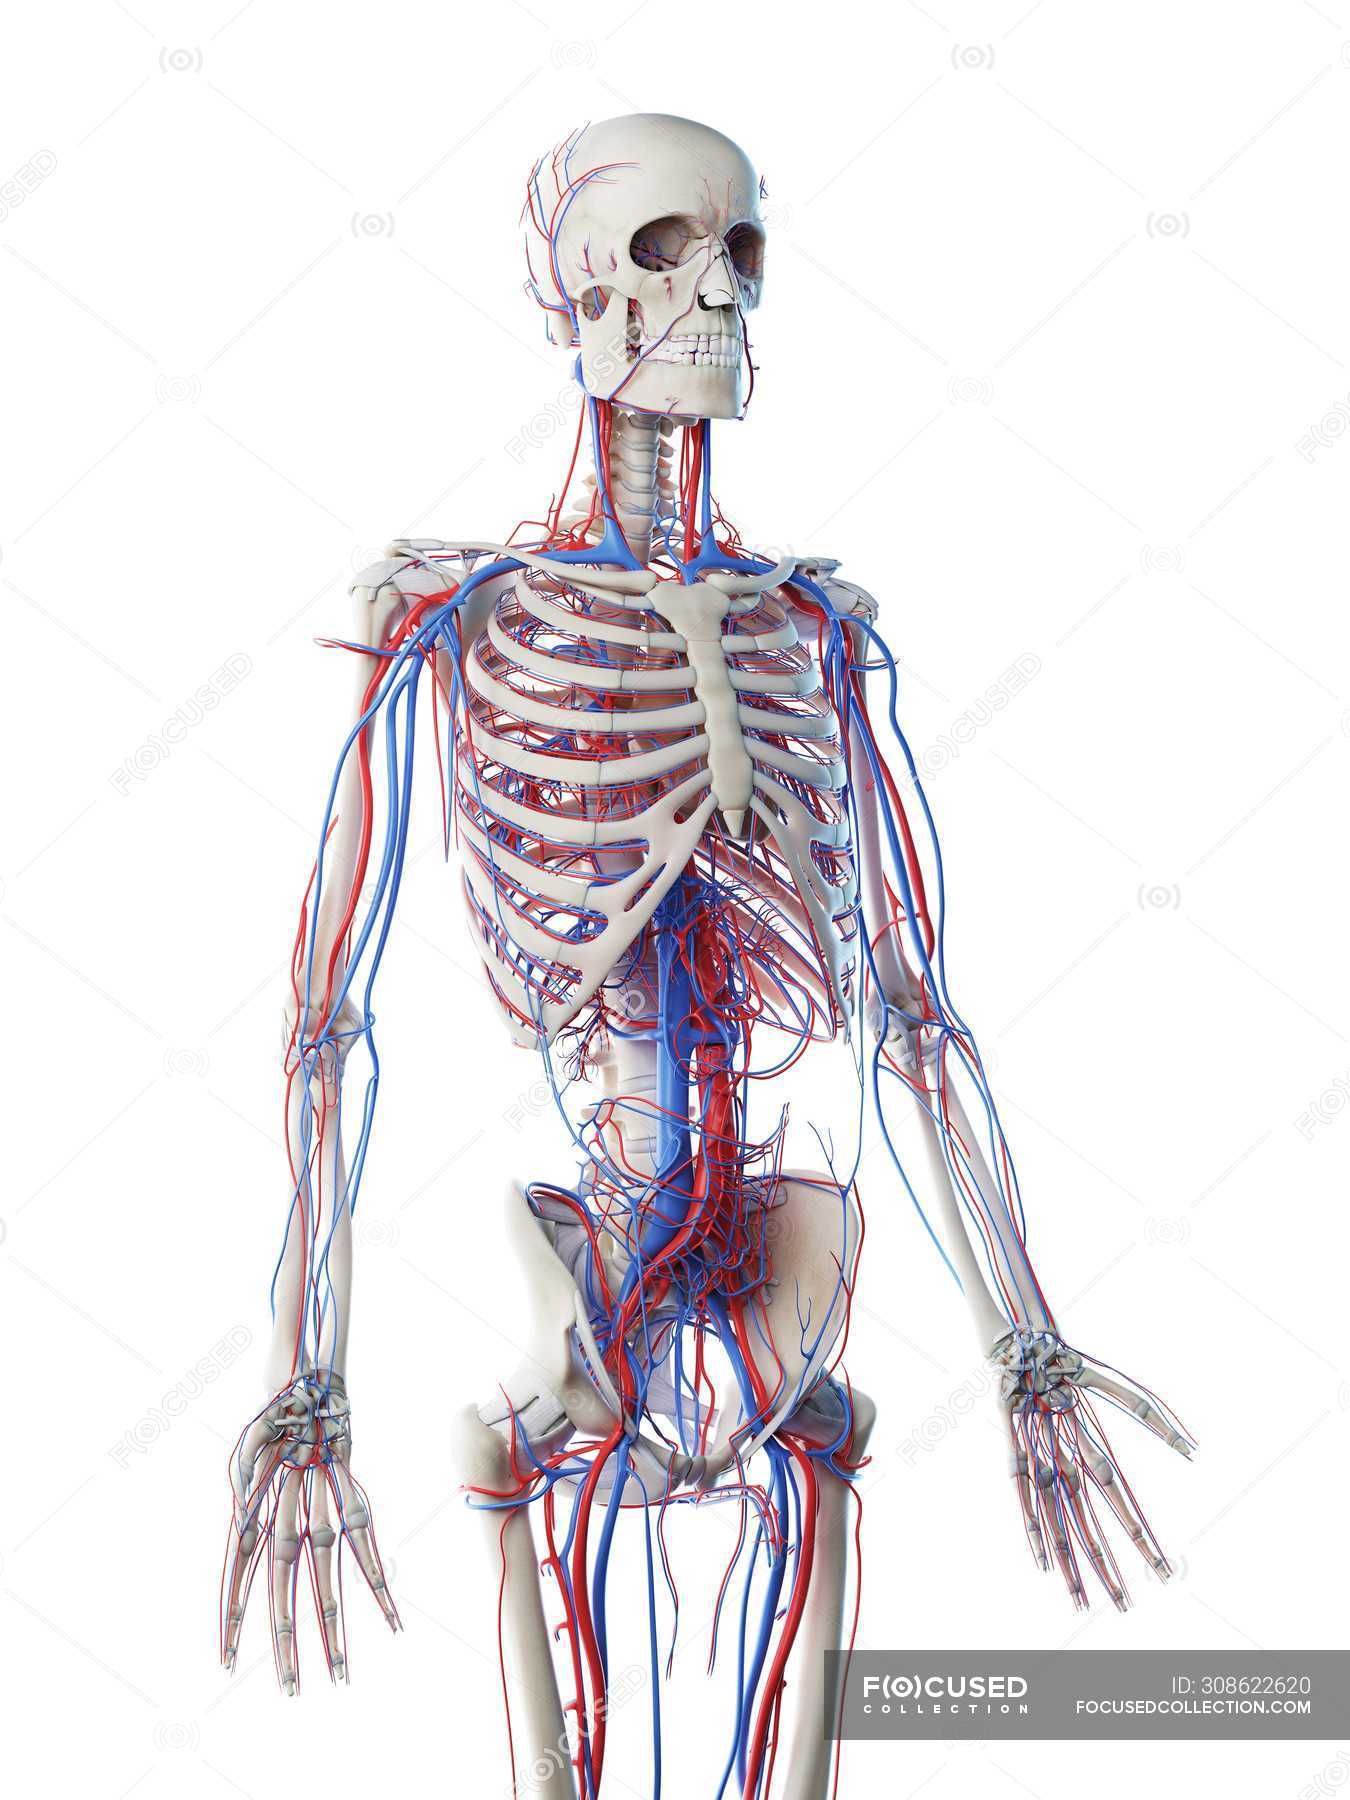 Male Anatomy Showing Skeleton And Vascular System Computer Illustration Aorta Artwork Stock Photo 308622620